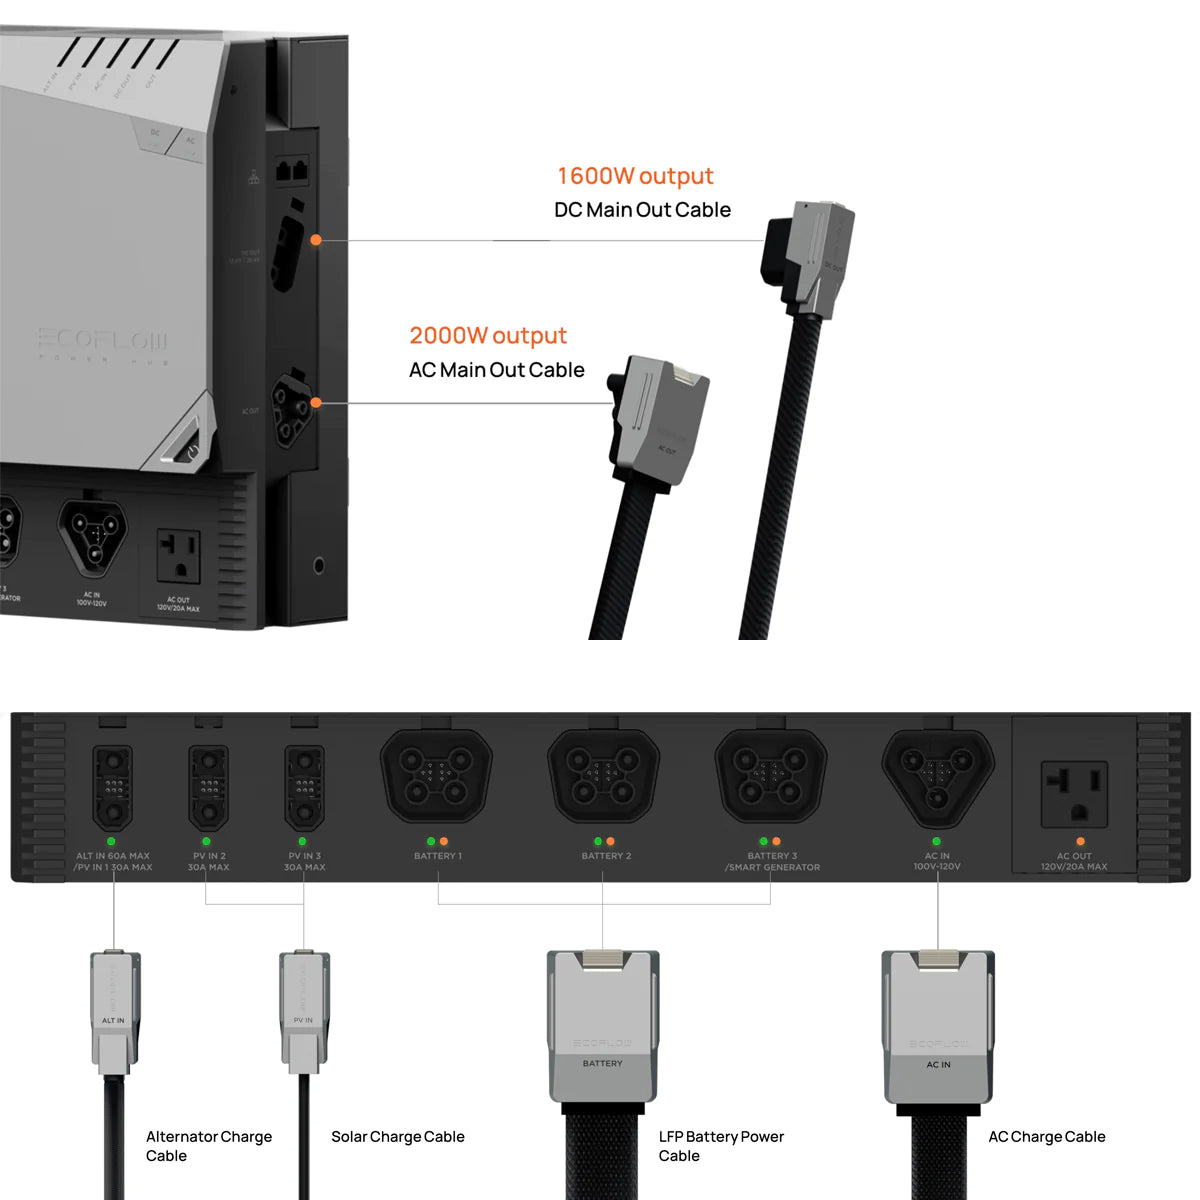 Ecoflow Power Hub Alternator Charge Adapter - testSmartify - Casa Inteligente - Smart Home 